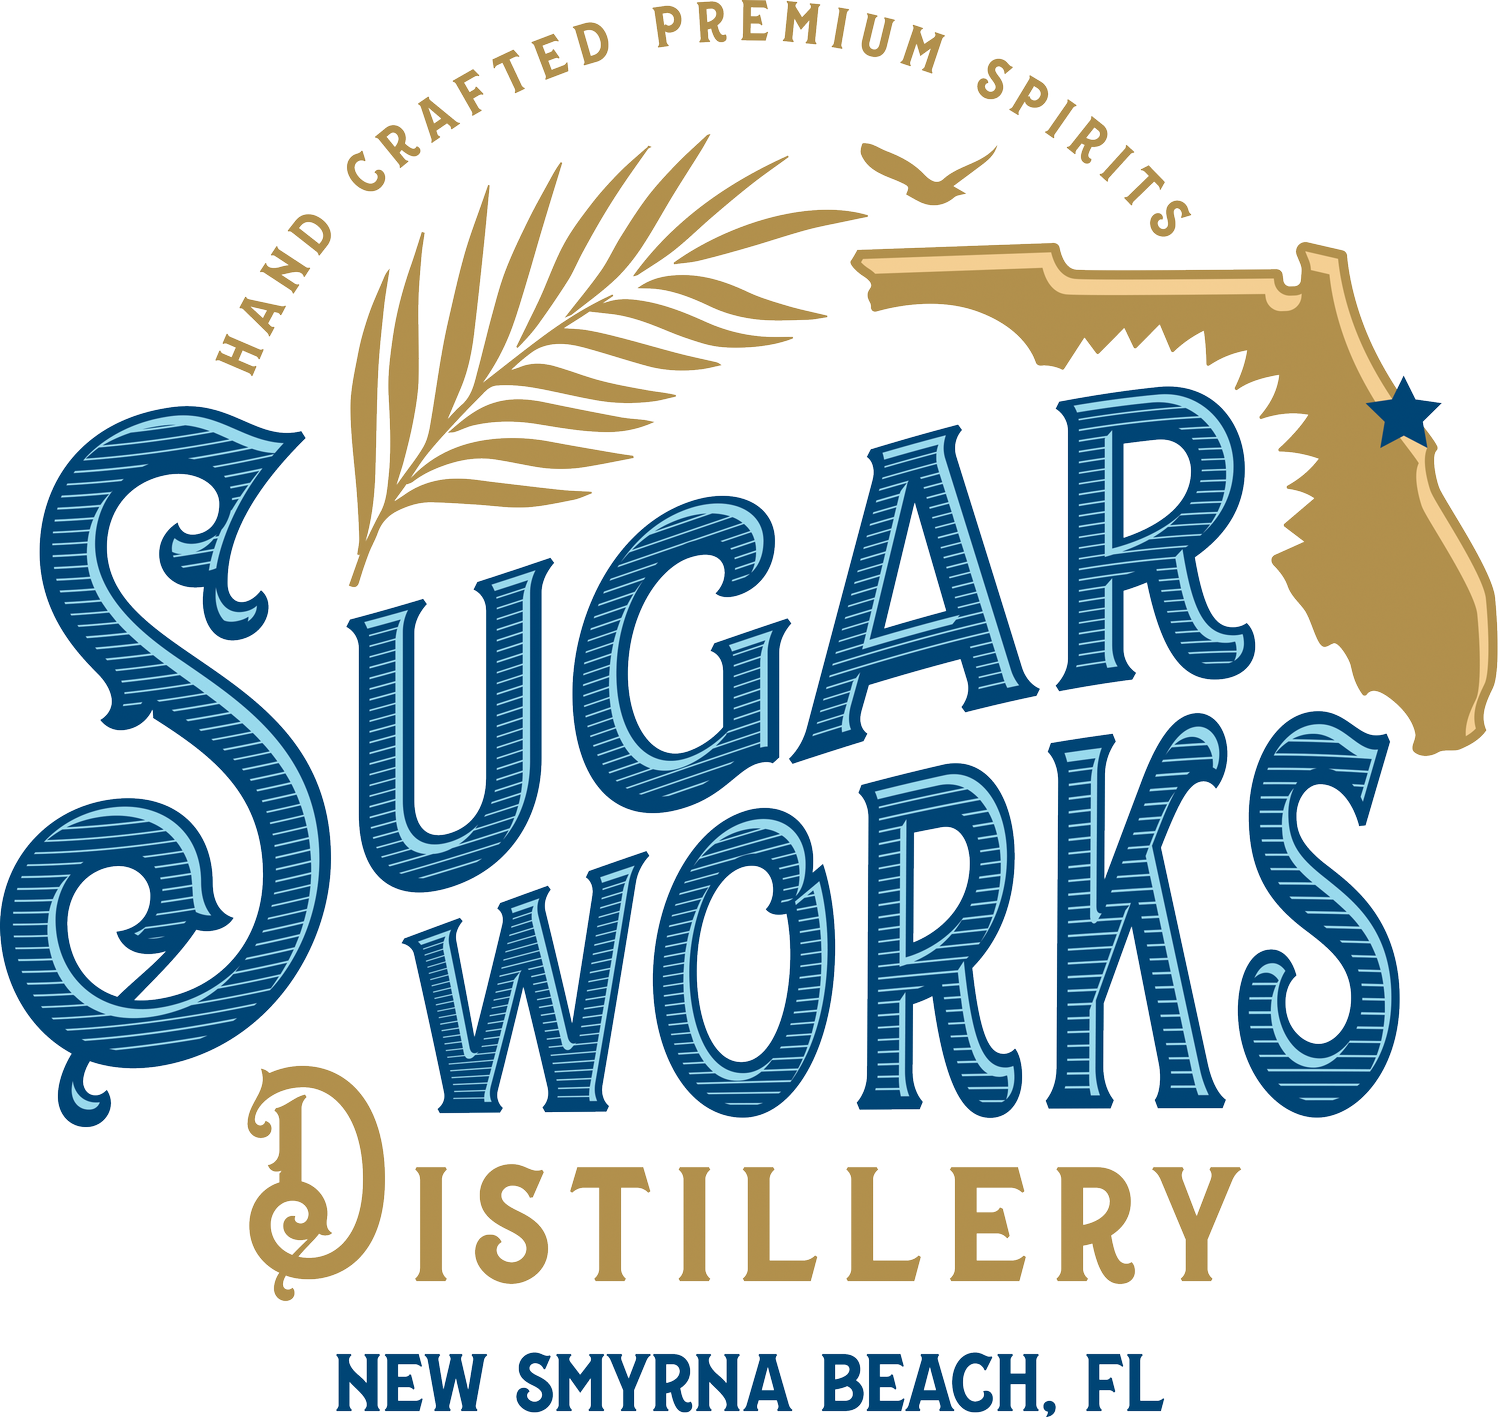 Sugar Works Distillery